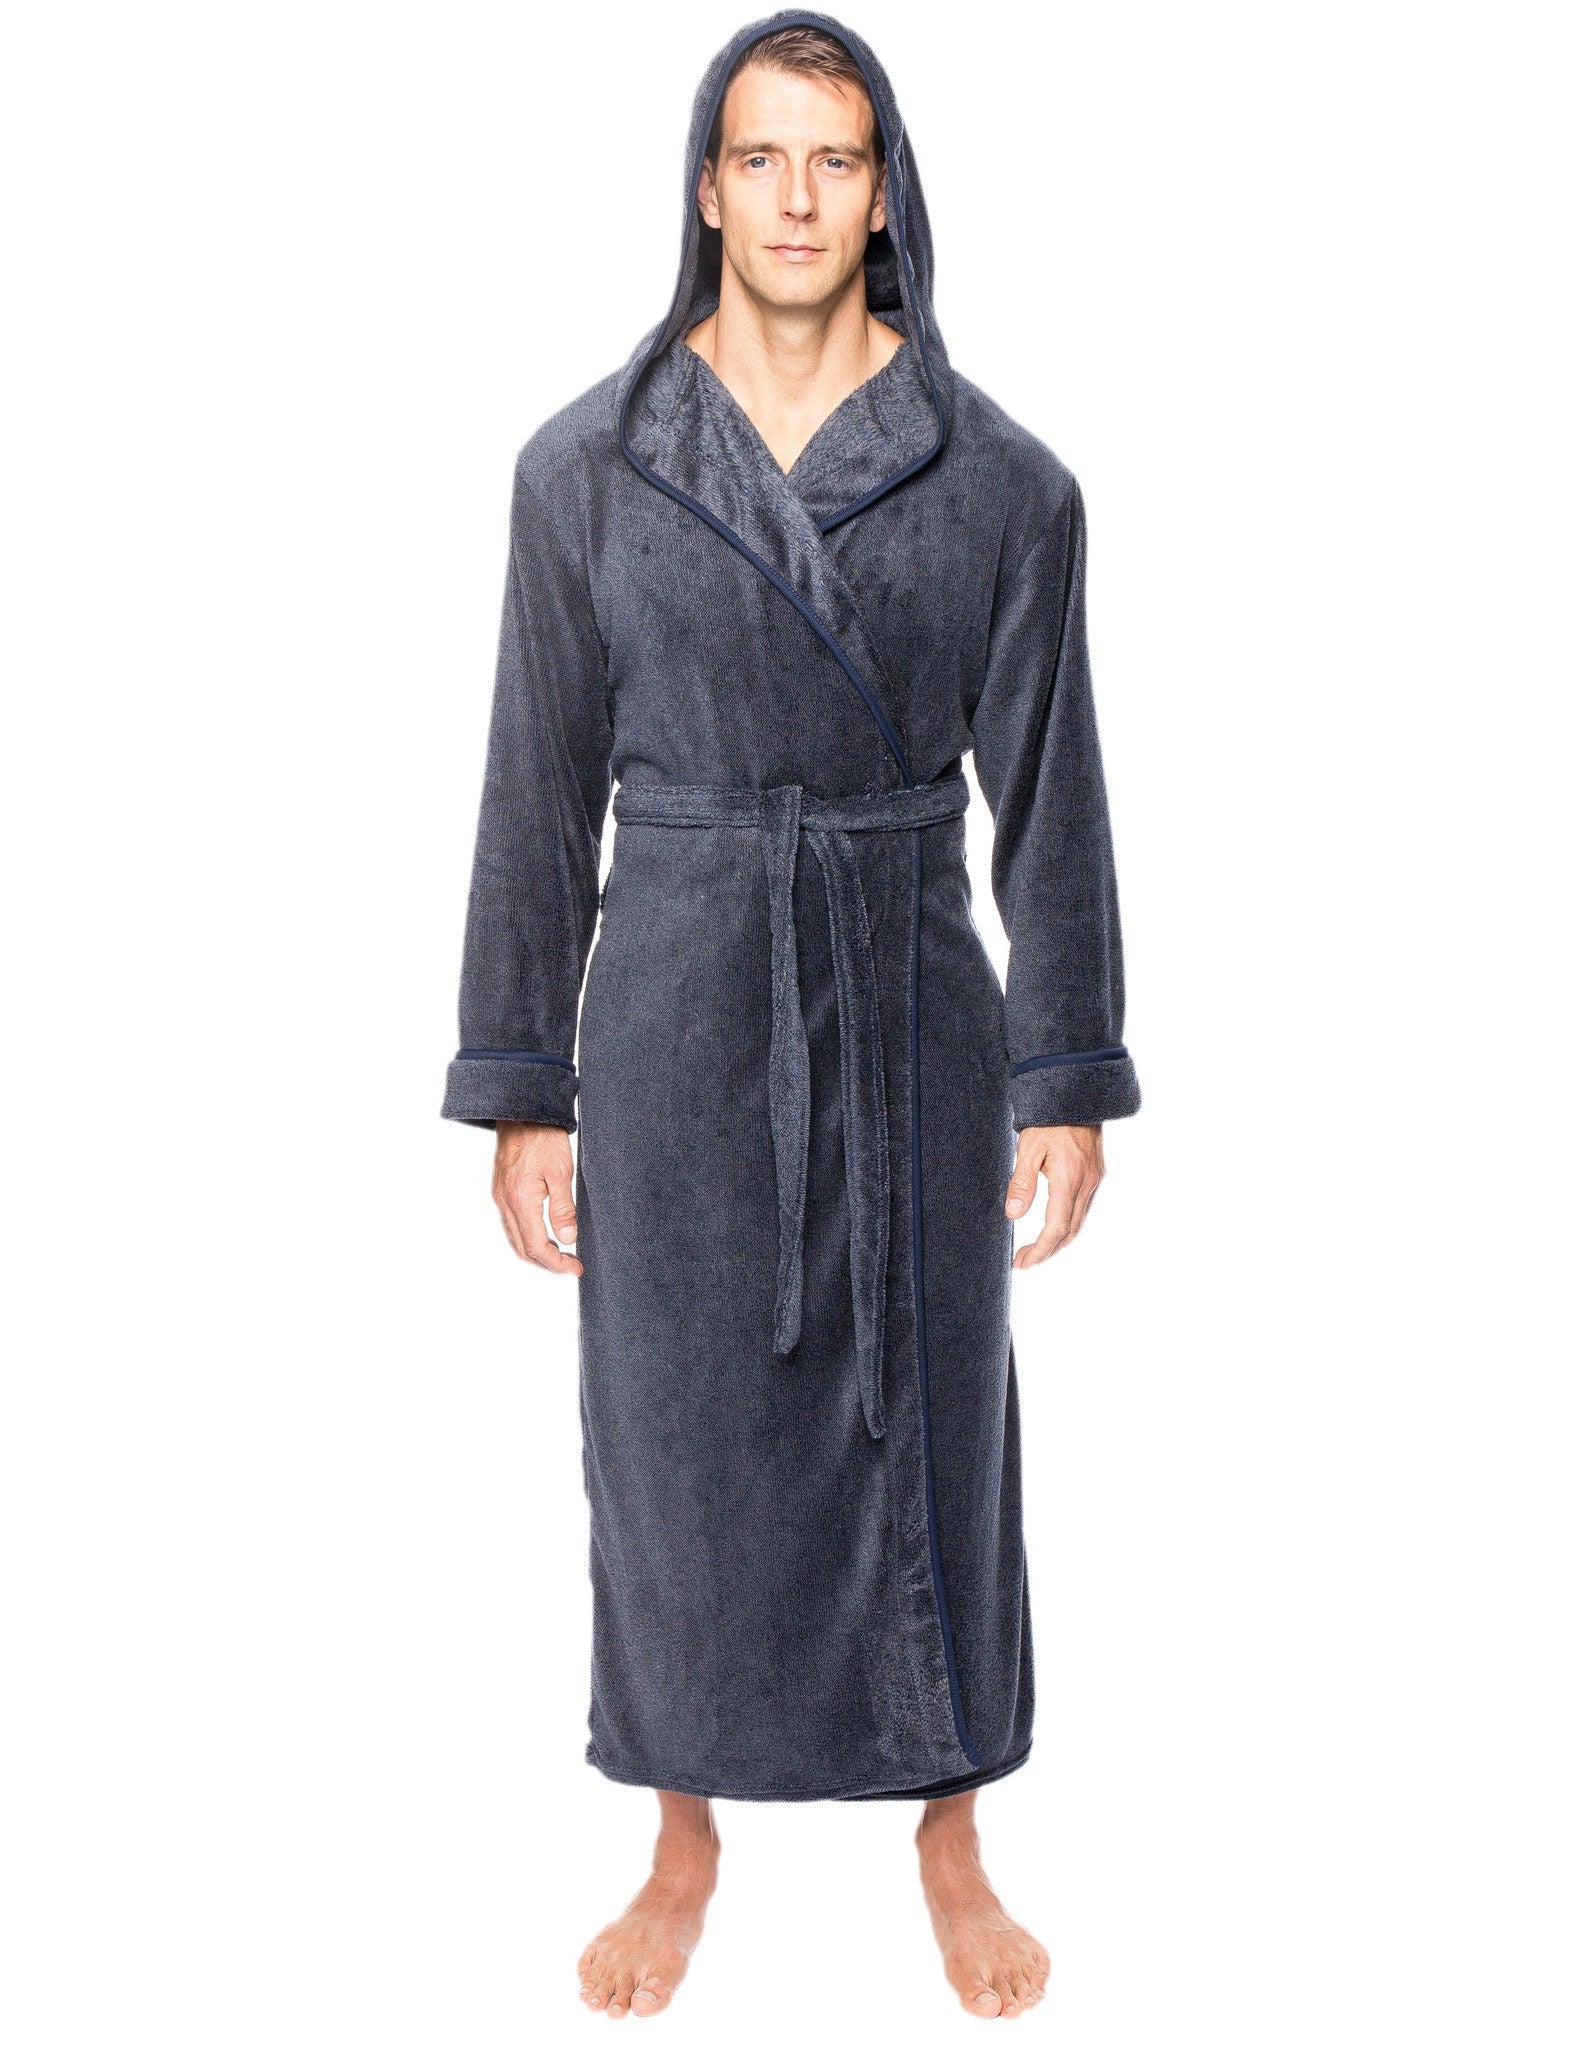 Men's Premium Coral Fleece Long Hooded Plush Spa/Bath Robe